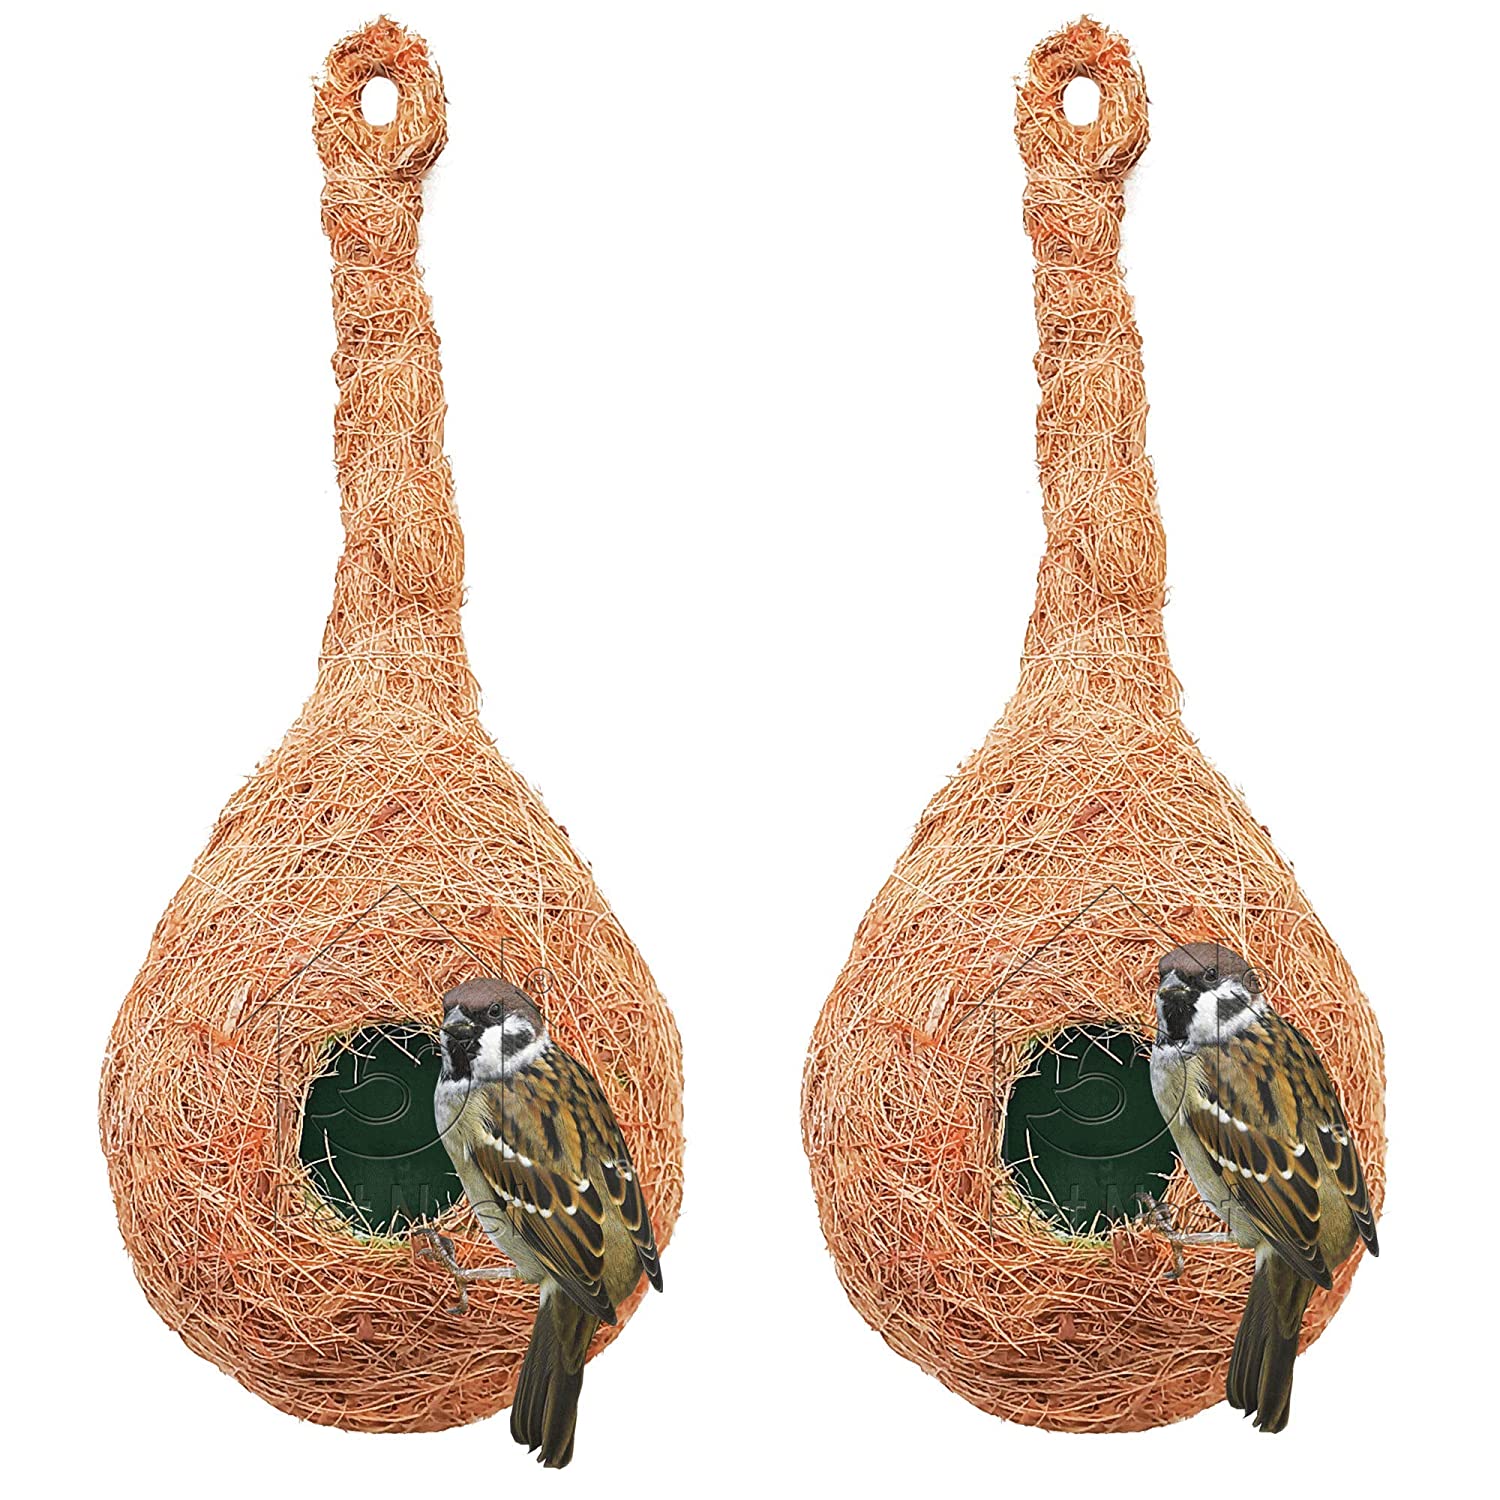 Safest Round Organic Bird Nest Purely Handmade Love Birds/Sparrow (Brown)  -Set Of 2 By Petnest - Wildlifekart Is An Online Shop For Wildlife And  Nature Lovers.